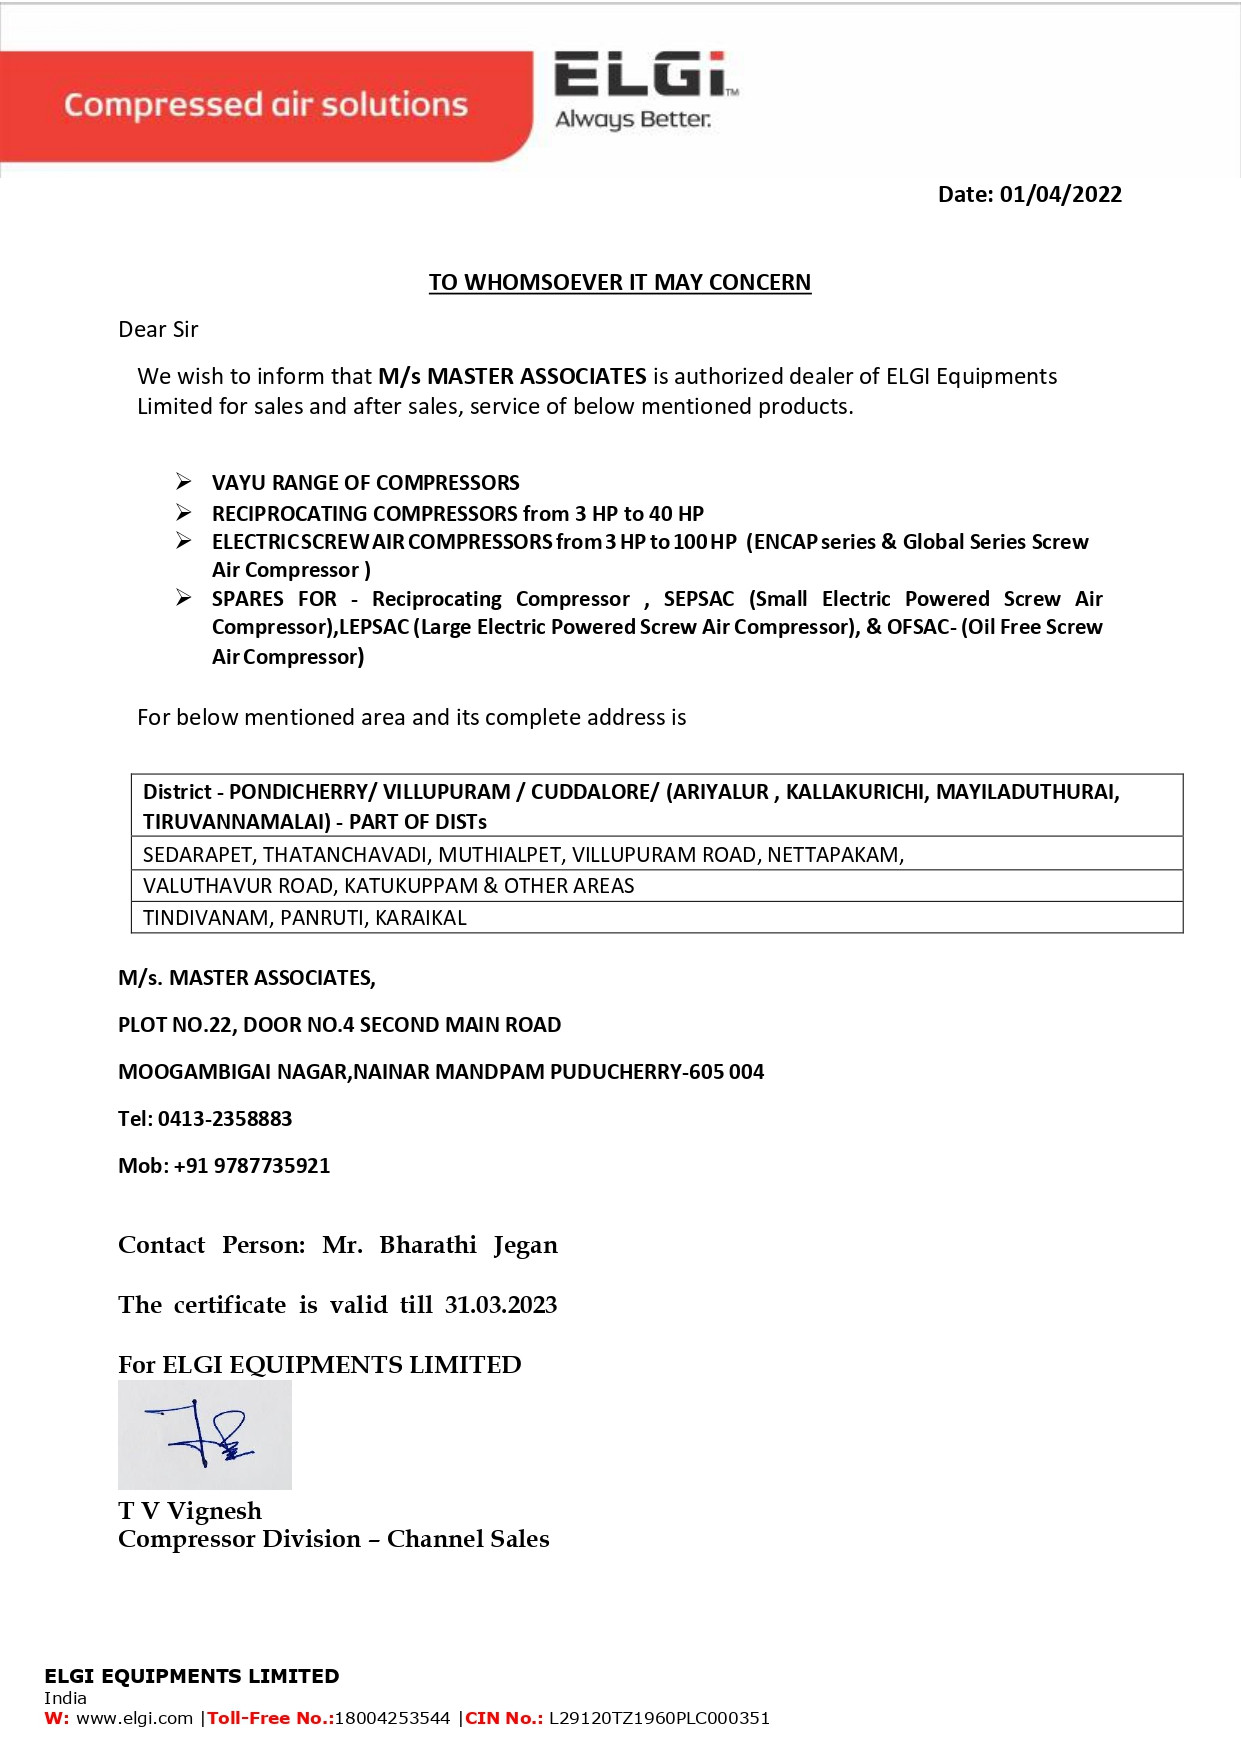 AL32ELGI Dealer Certificate - NEW 23-1_page-0001.jpg